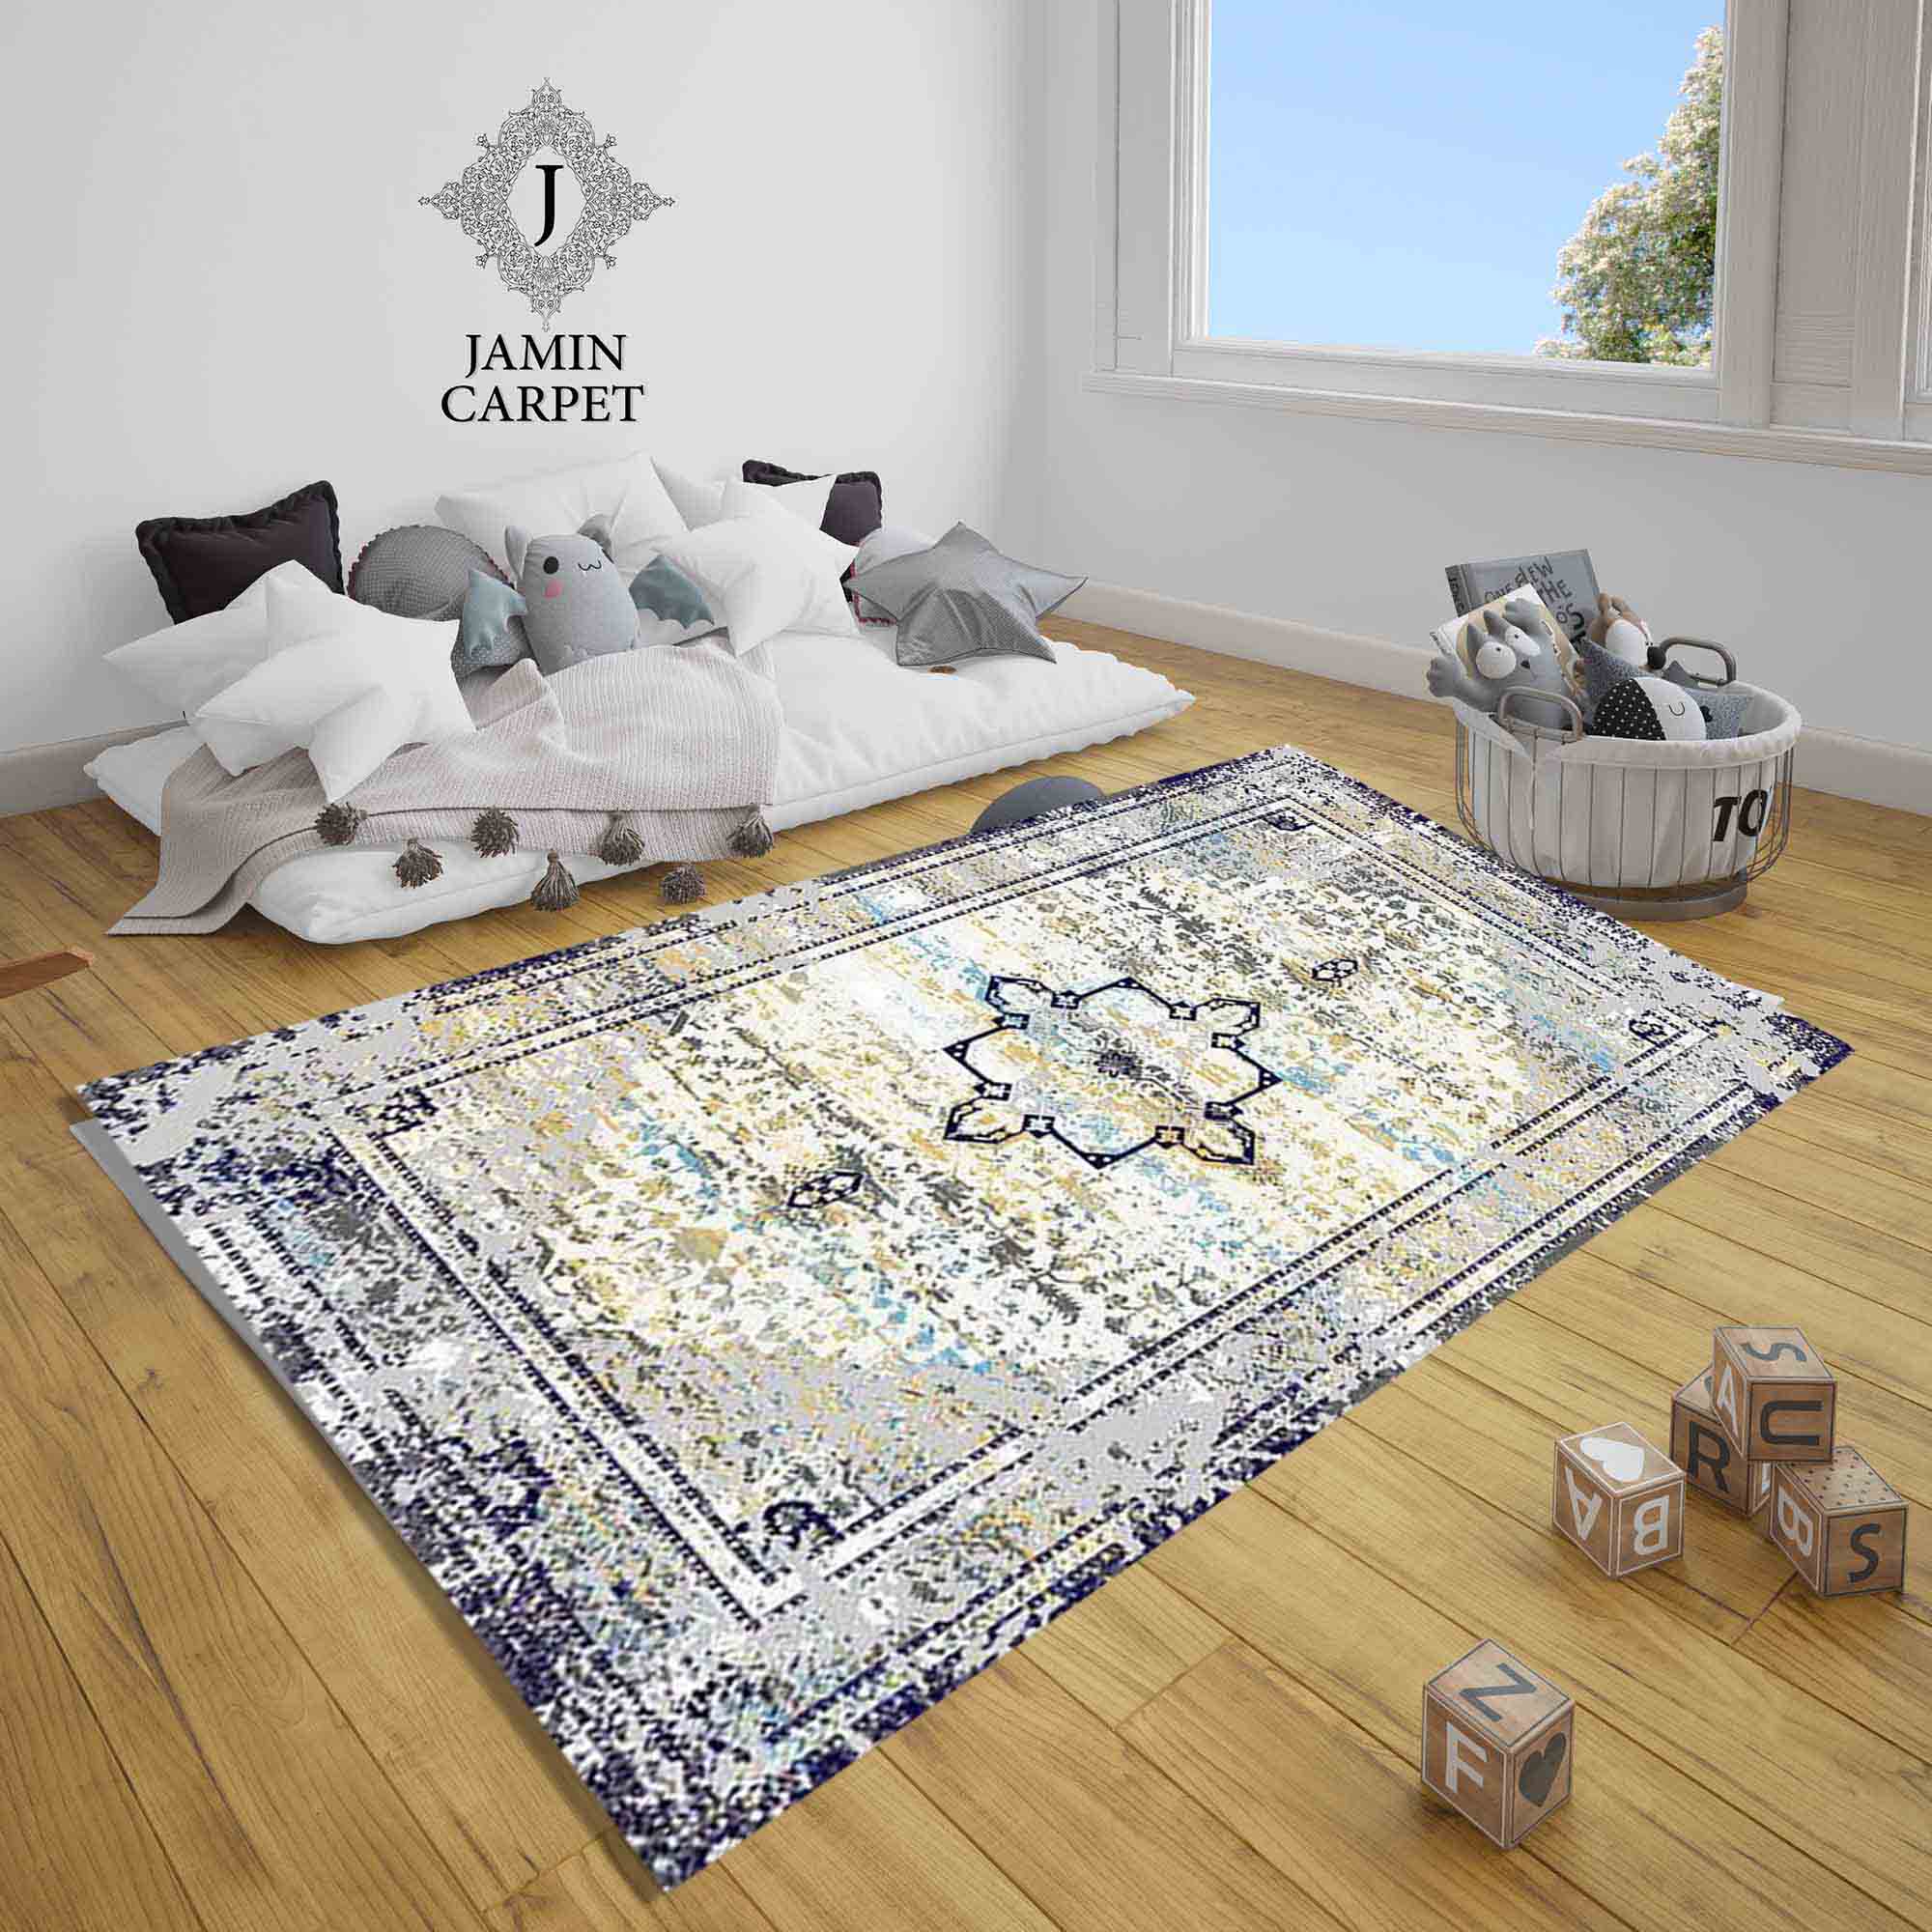 Fantasy carpet, code 251, comb 400, density 1800, all acrylic